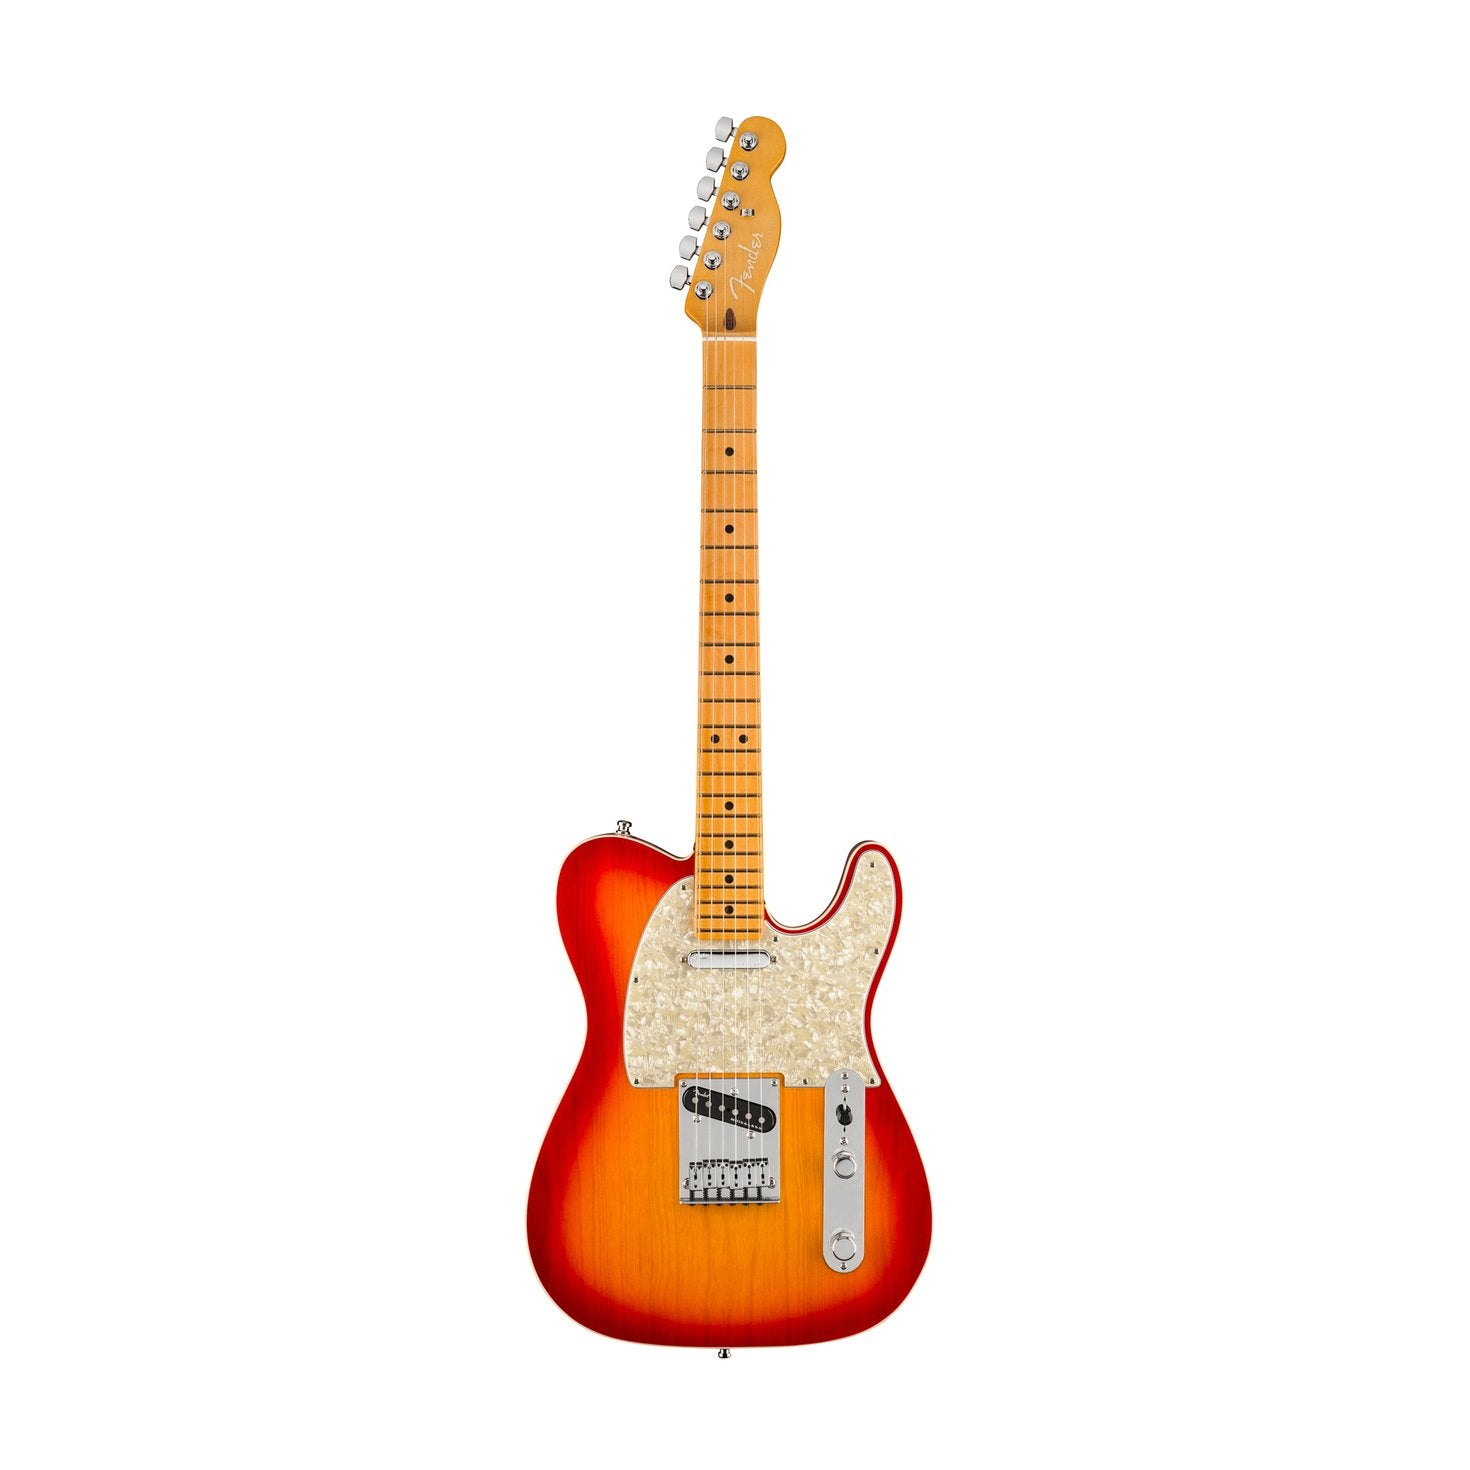 Fender American Ultra Telecaster Electric Guitar, Maple FB, Plasma Red Burst, FENDER, ELECTRIC GUITAR, fender-electric-guitar-f03-011-8032-773, ZOSO MUSIC SDN BHD